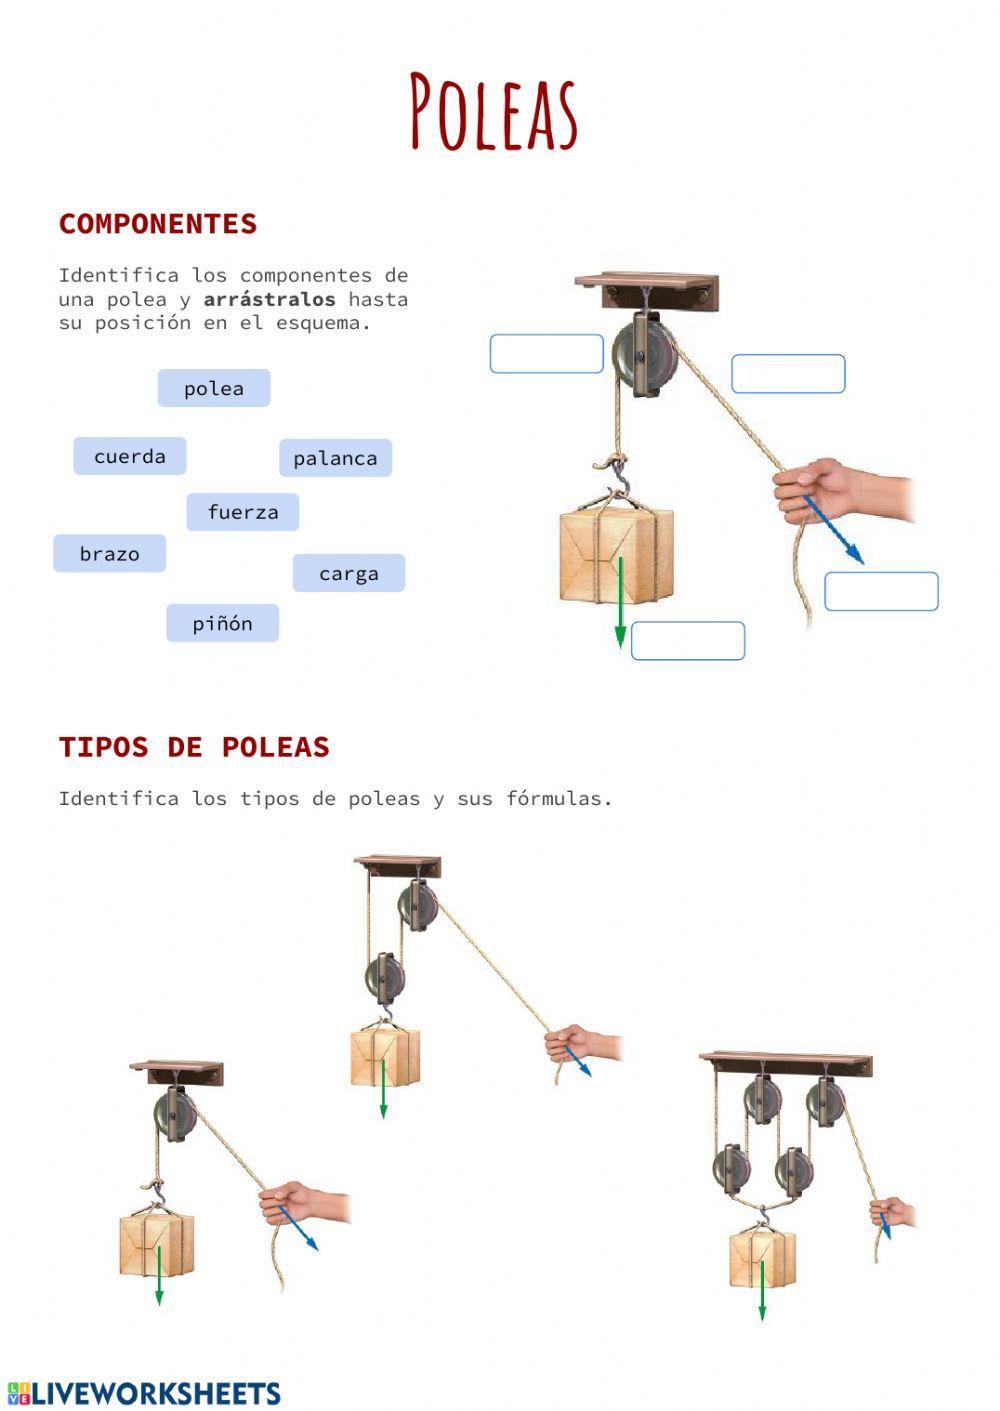 Poleas interactive worksheet | Live Worksheets